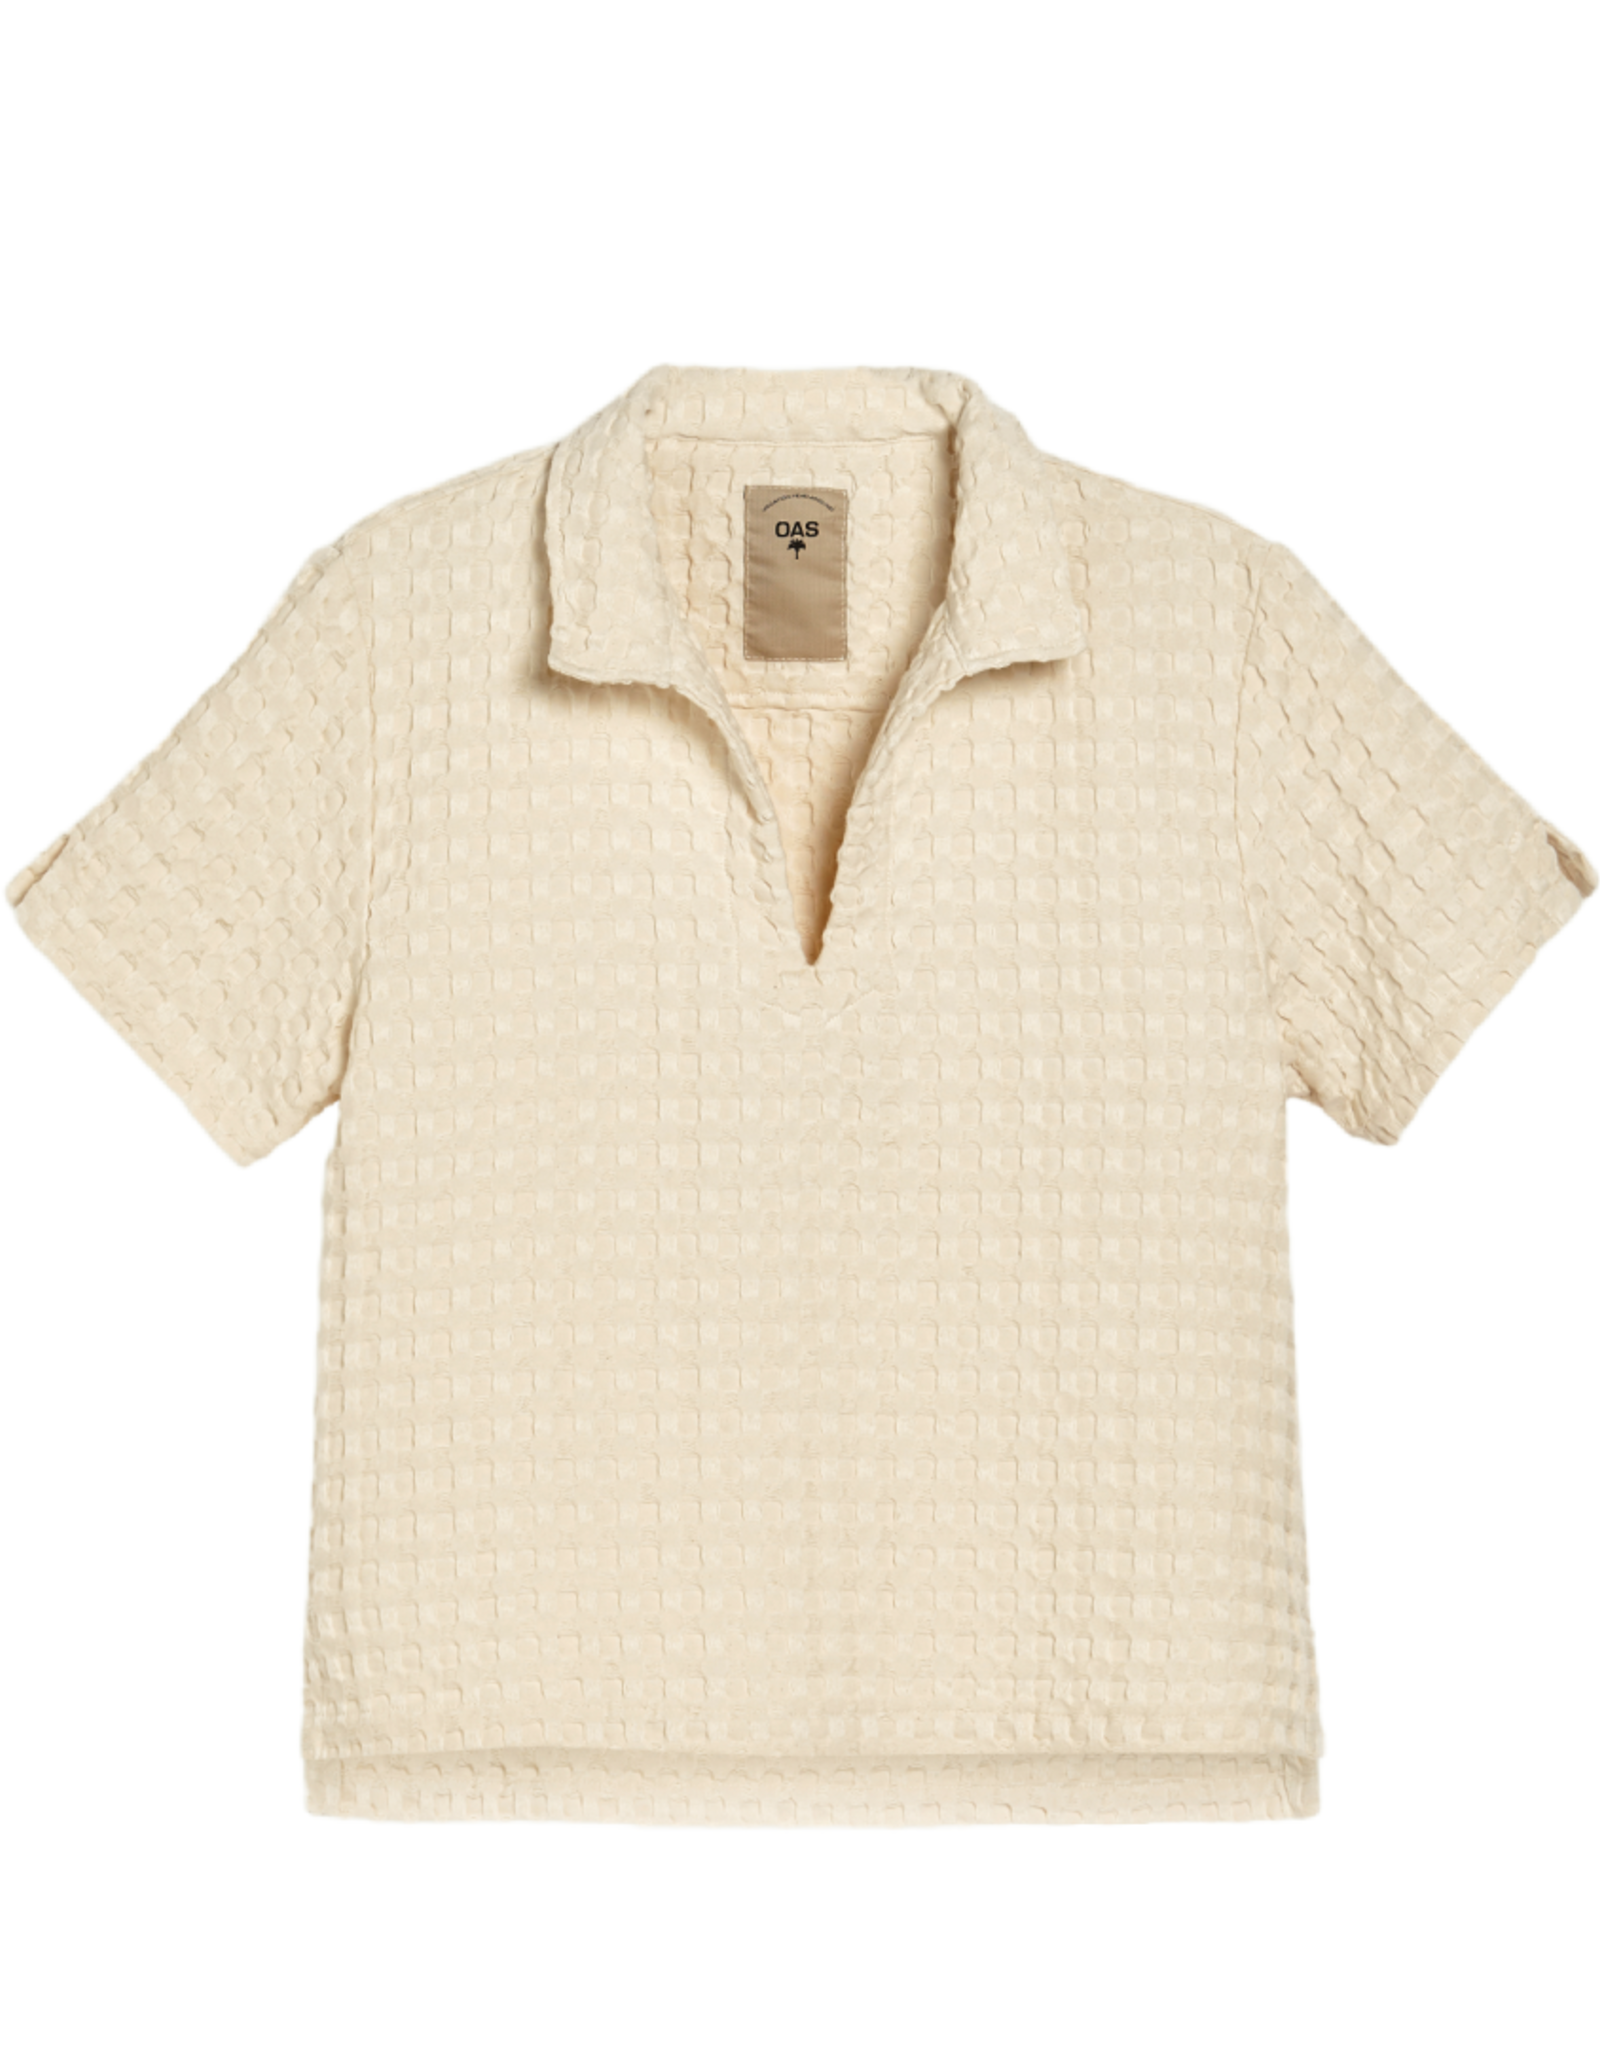 OAS Compagny shirt 'Jaffa Waffle' - cotton